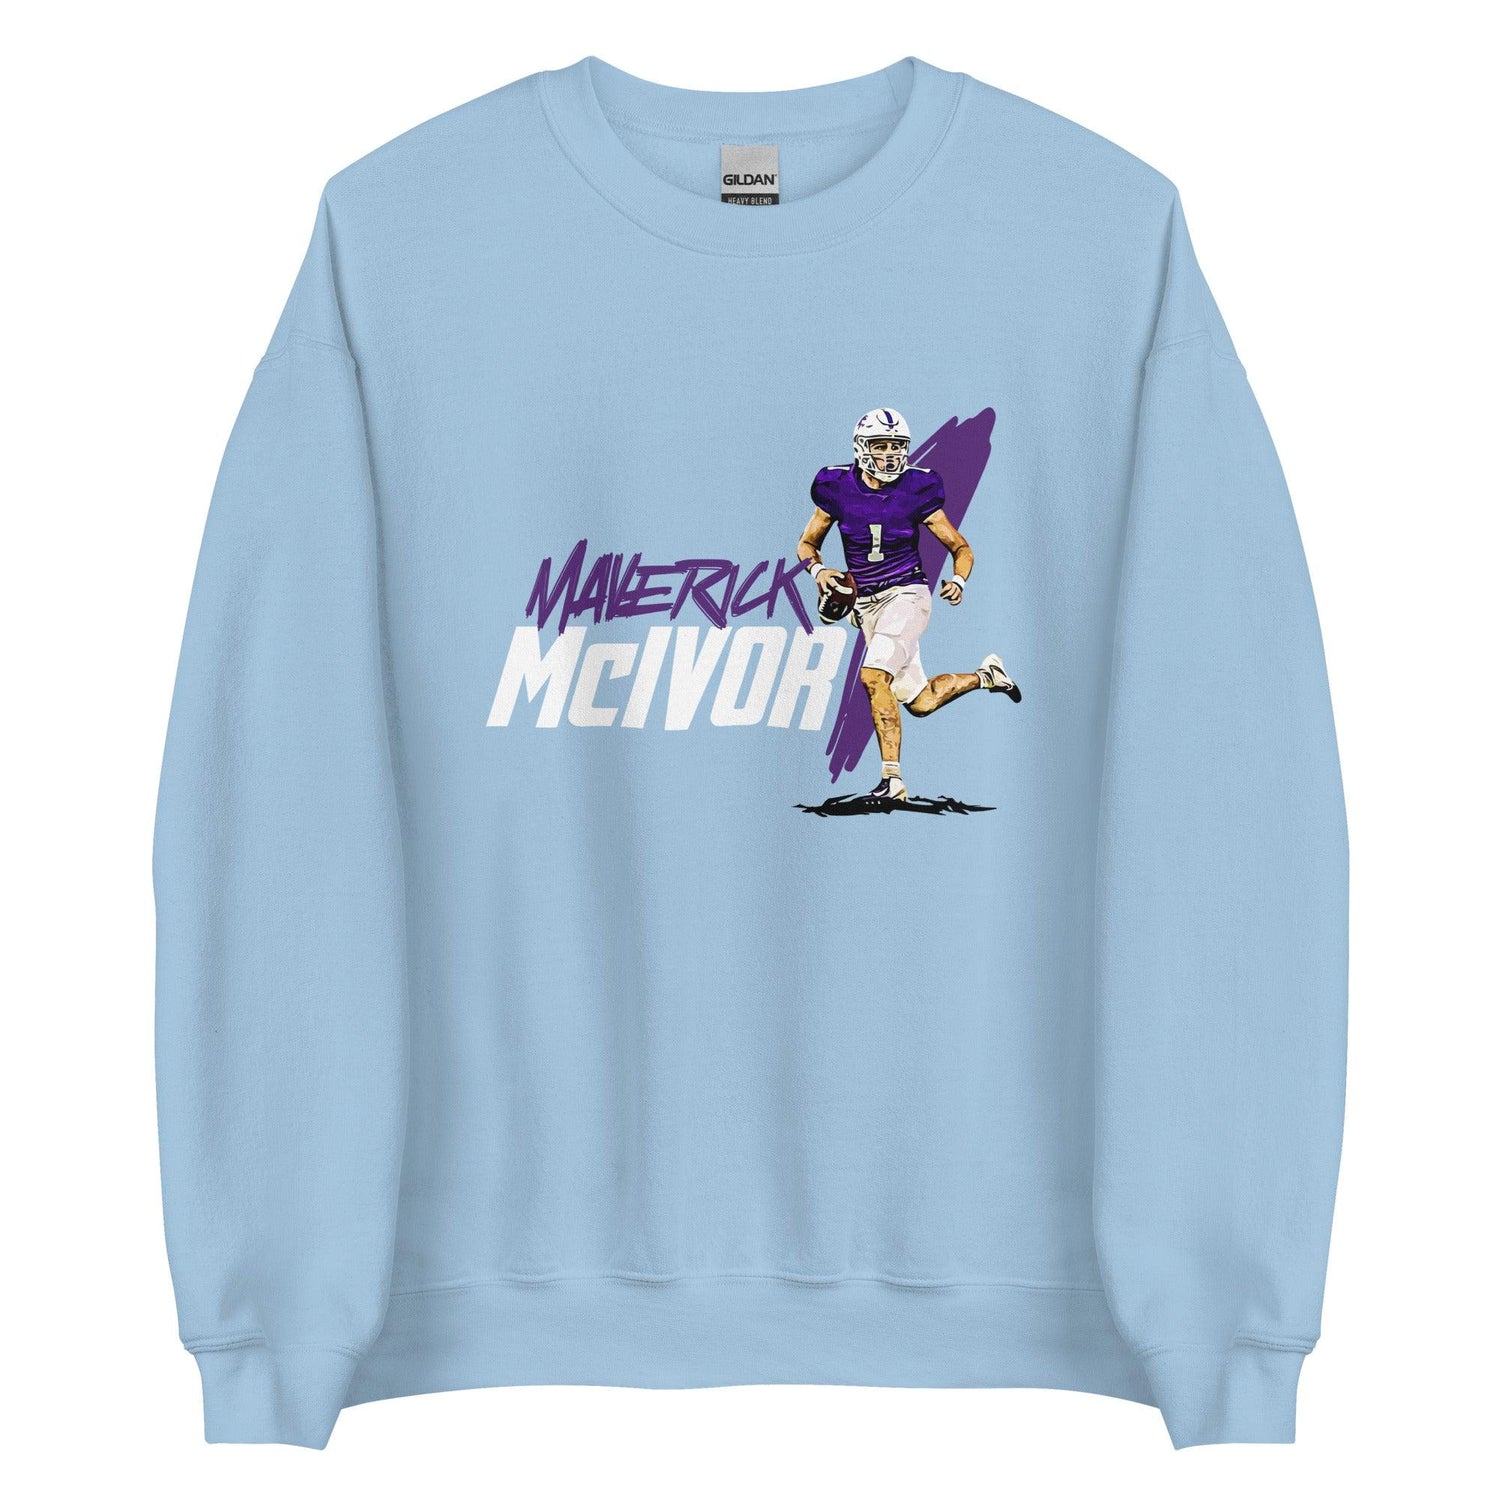 Maverick McIvor "Gameday" Sweatshirt - Fan Arch